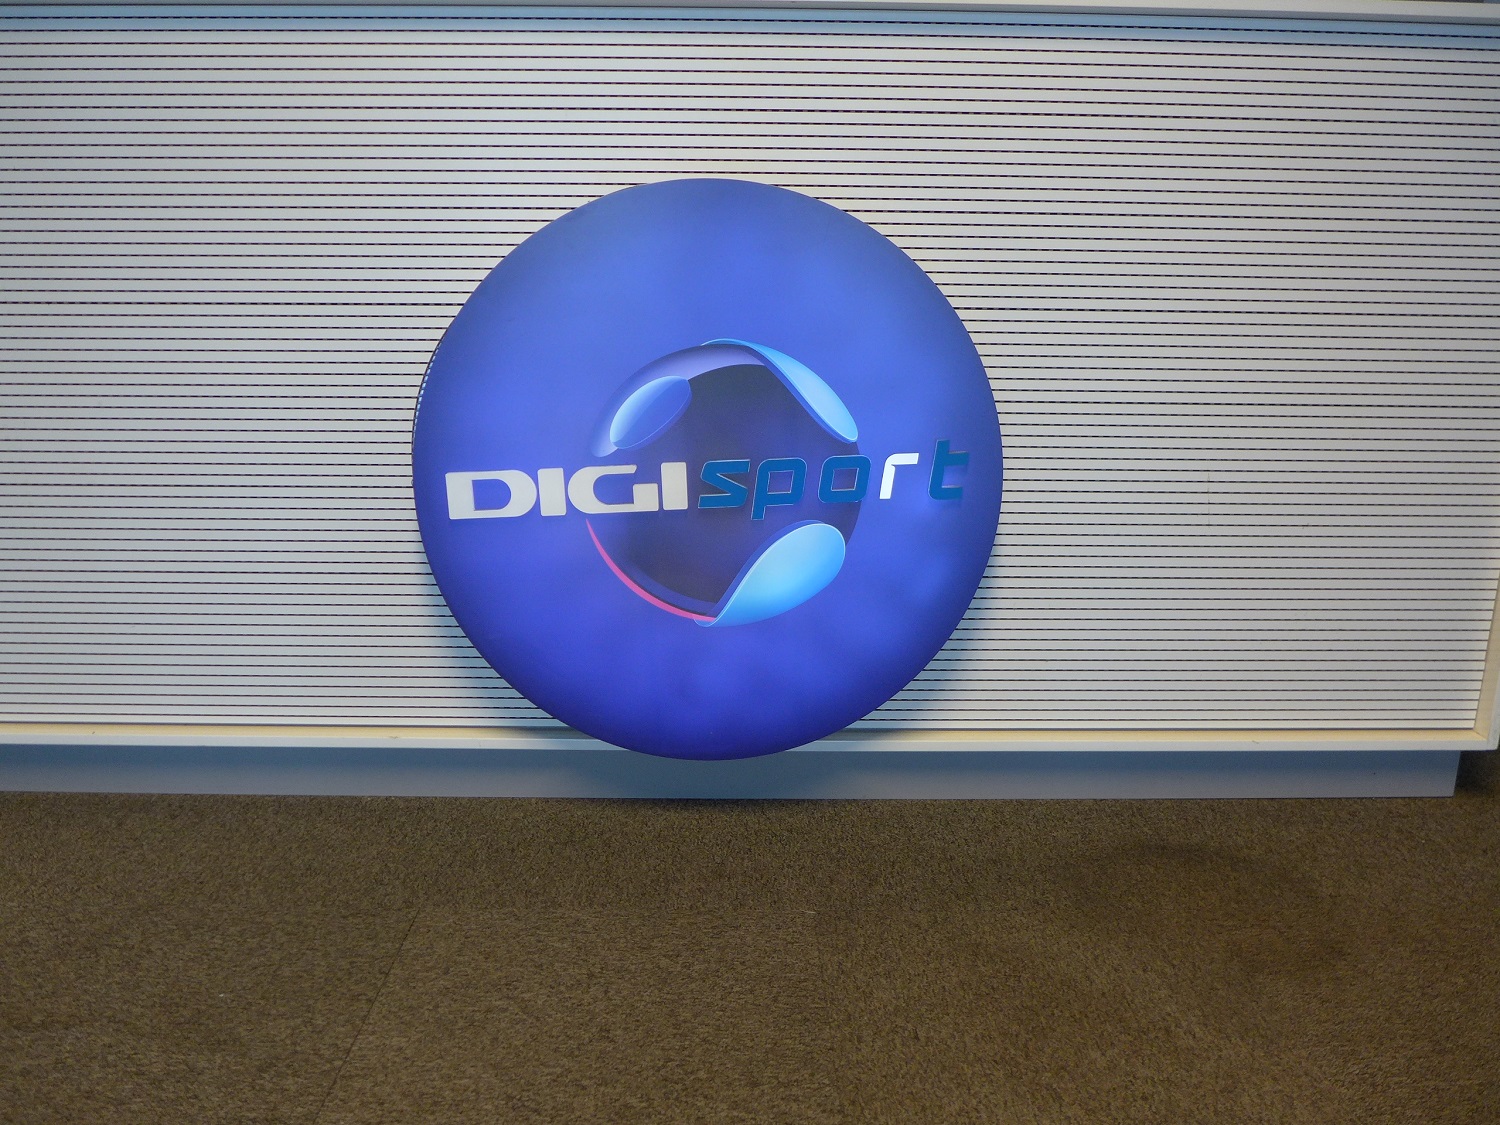 Le logo de la chaîne Digi sport.